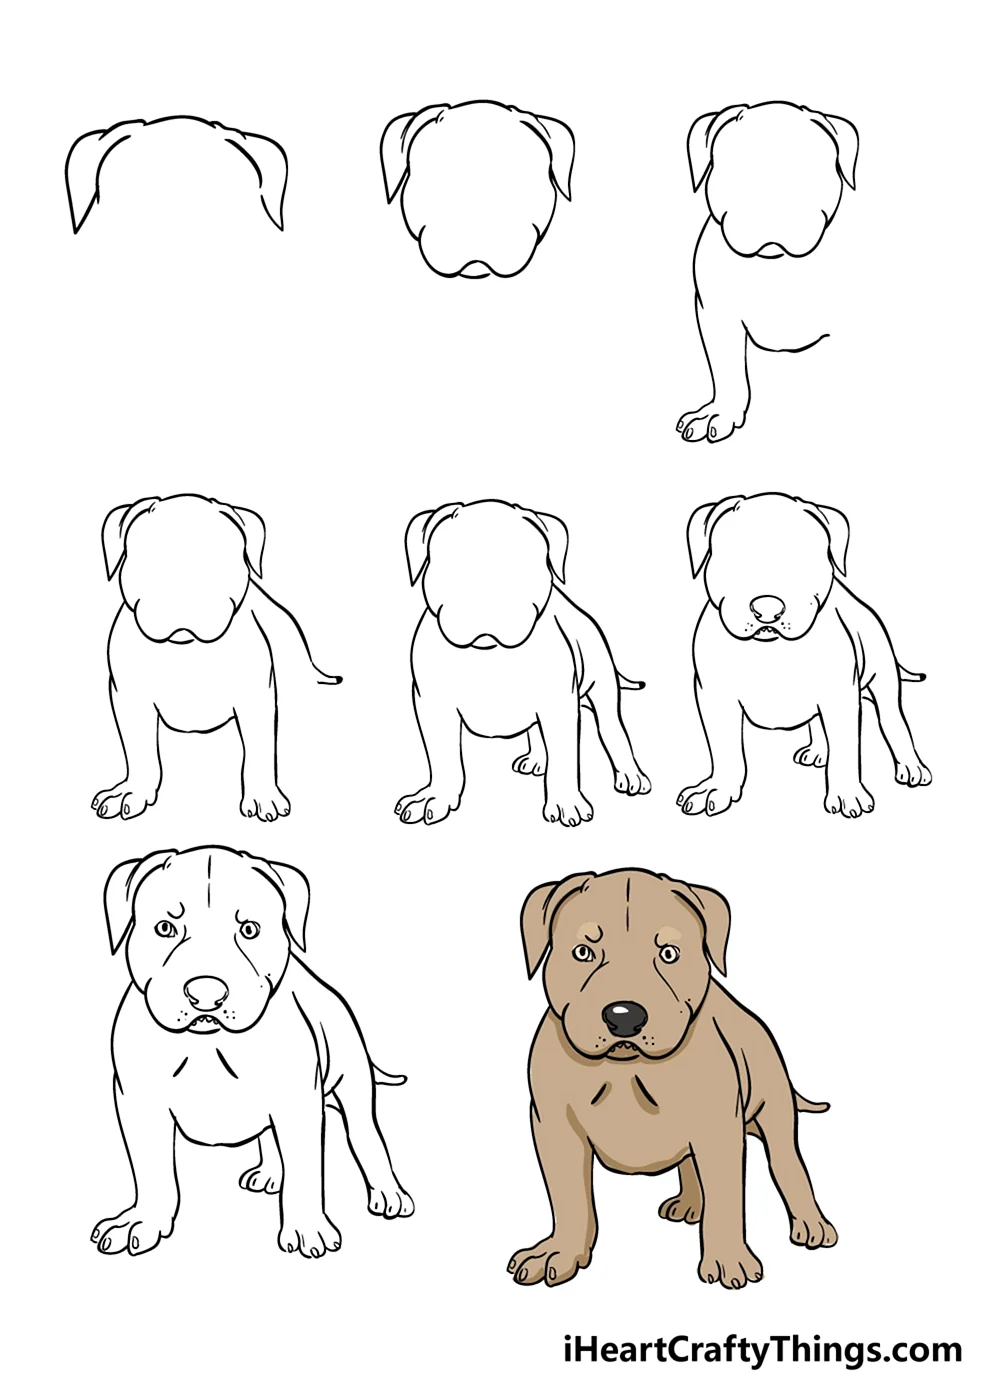 Как нарисовать собаку легко и красиво поэтапно